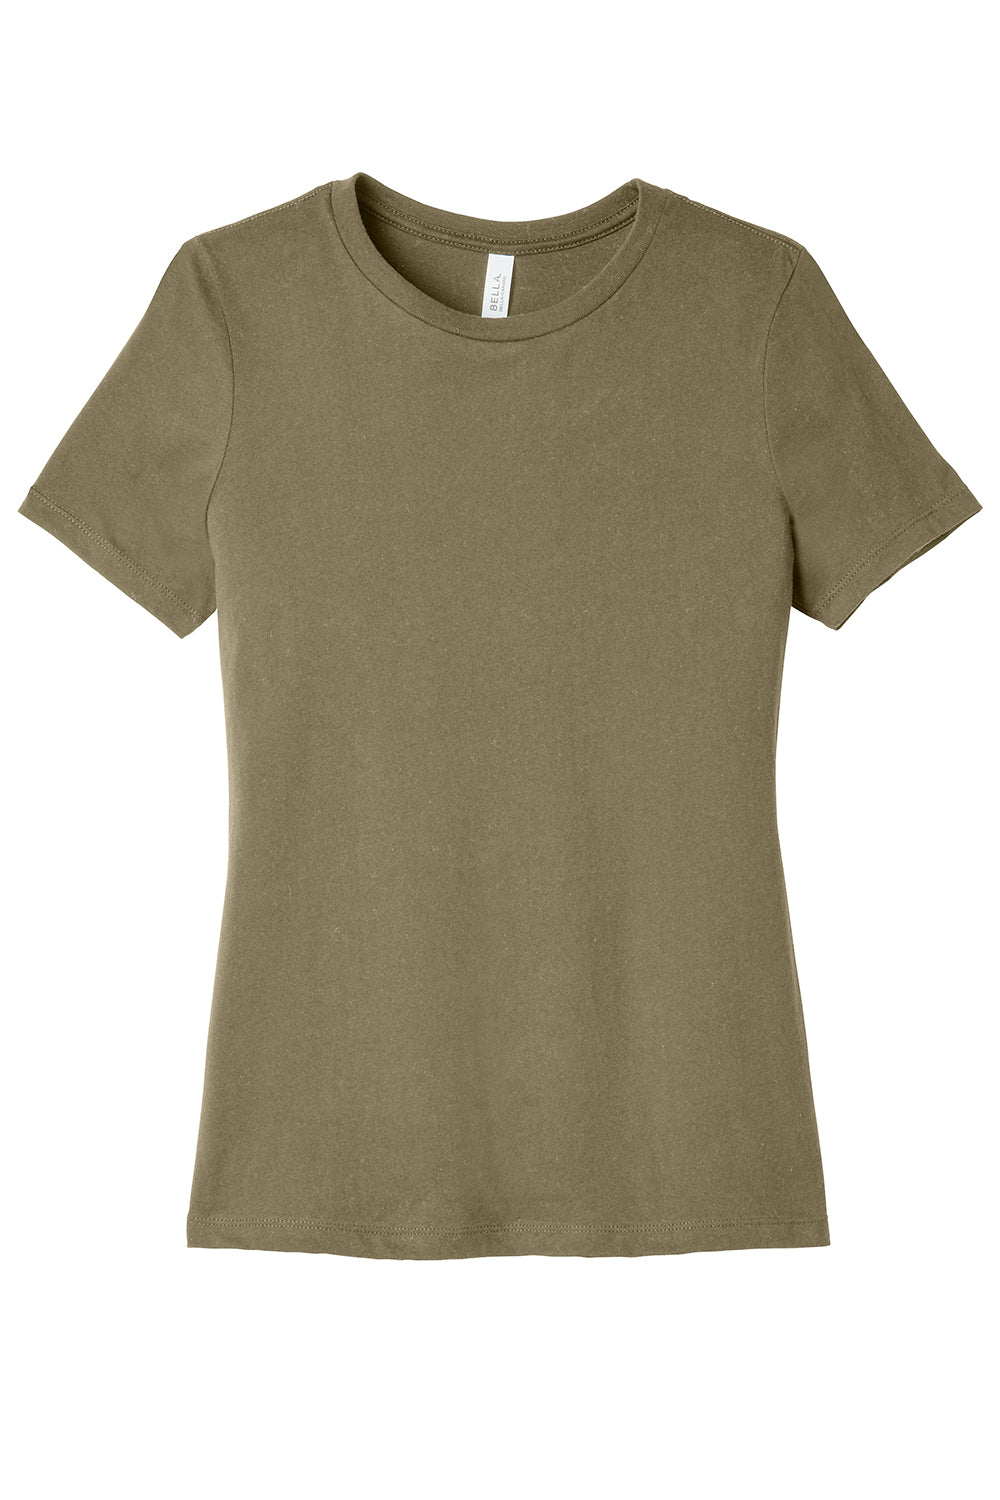 Bella + Canvas BC6413 Womens Short Sleeve Crewneck T-Shirt Olive Green Flat Front